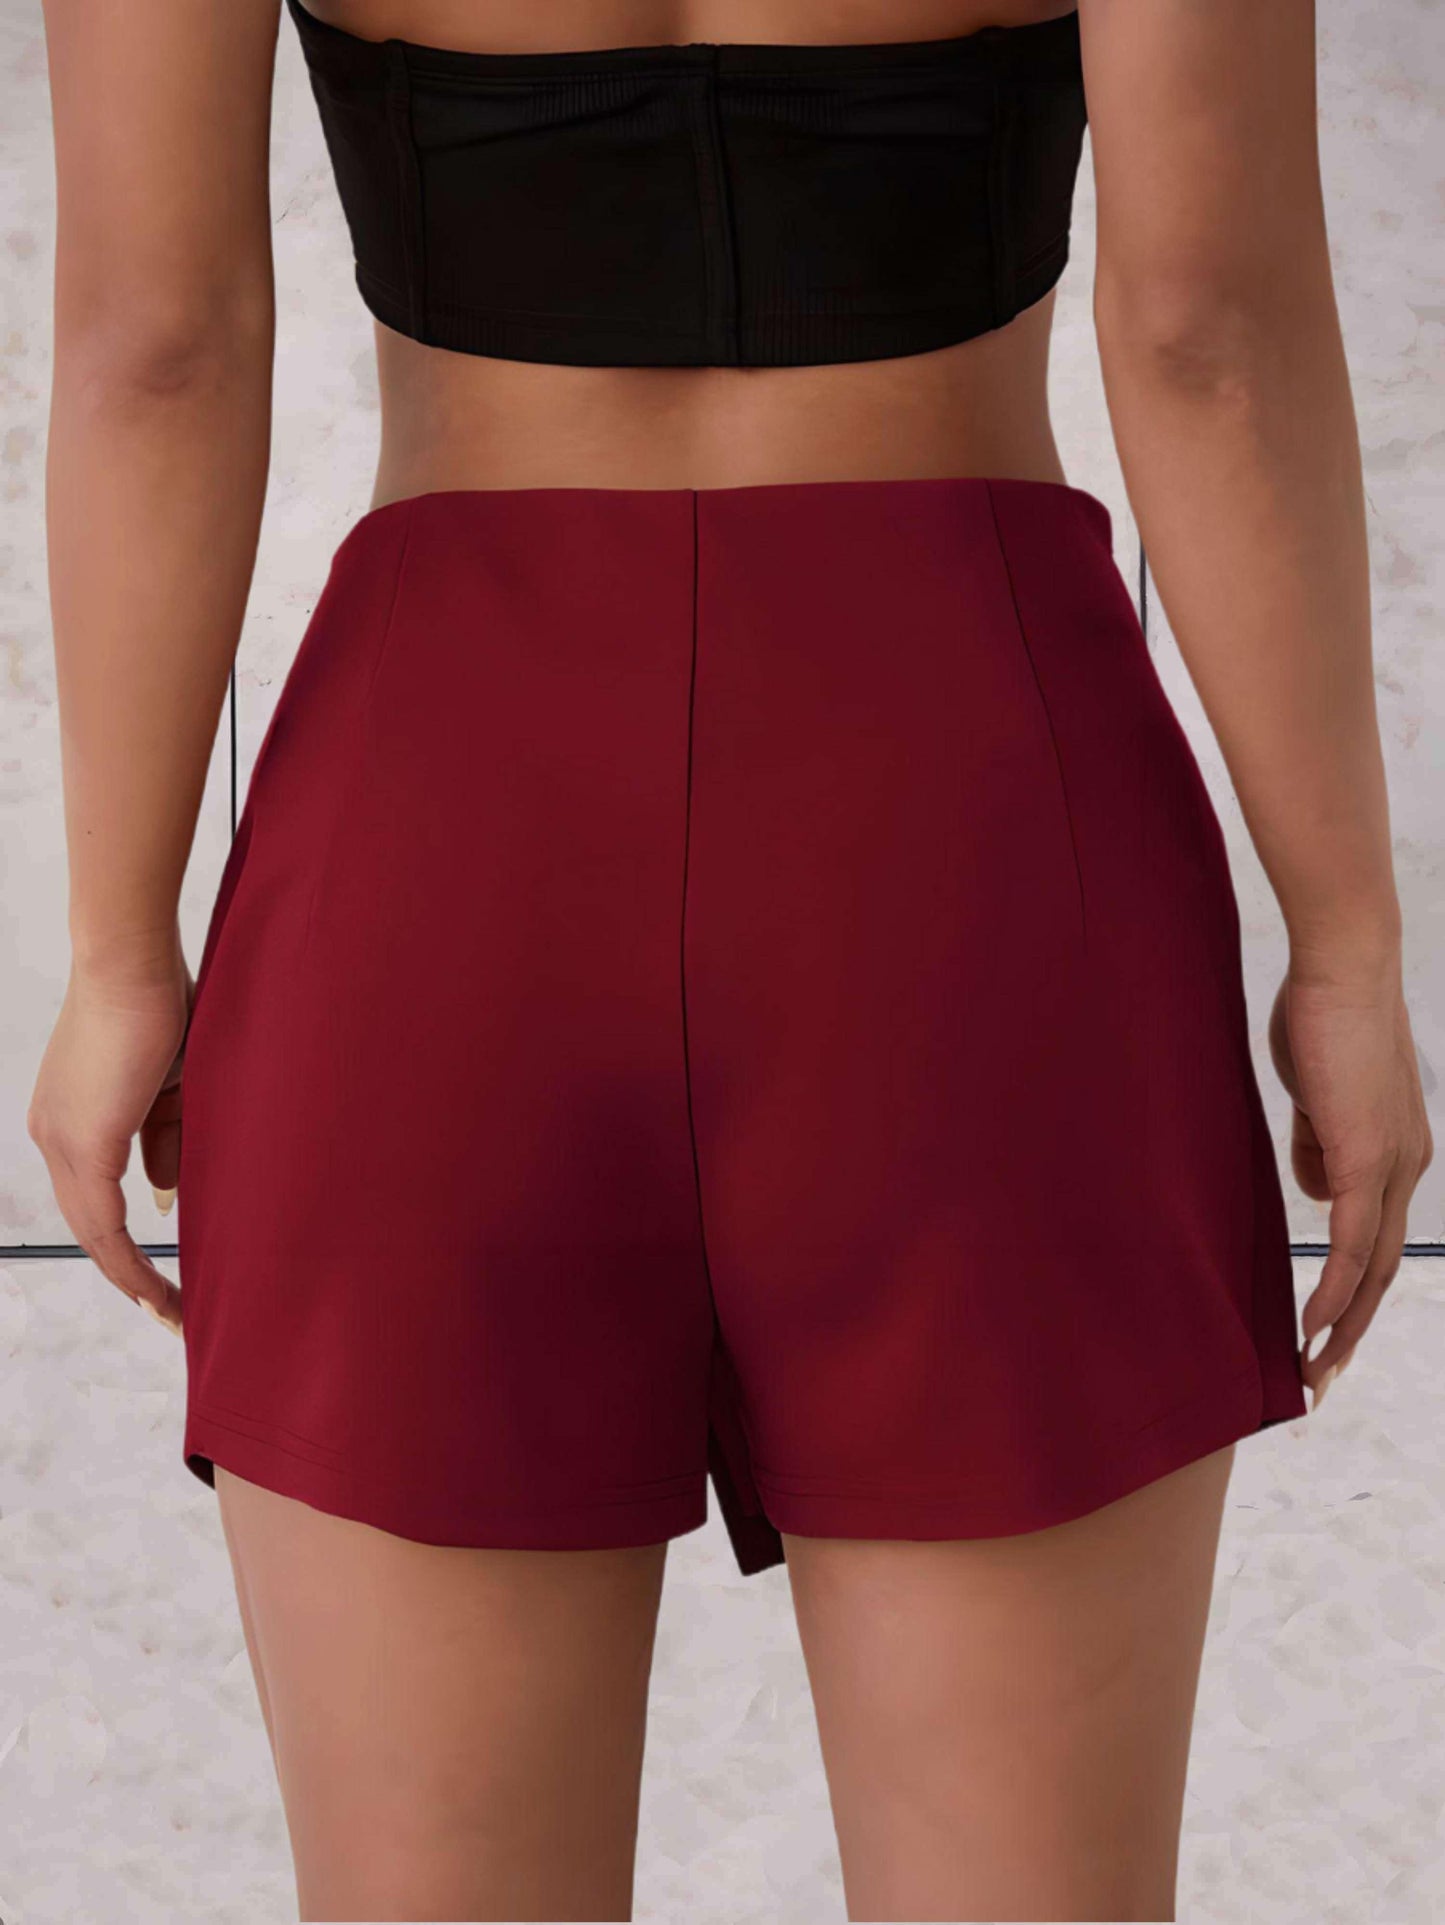 Ally - Strakke high-waist shorts van katoen in bordeaux rood - Sky-Sense